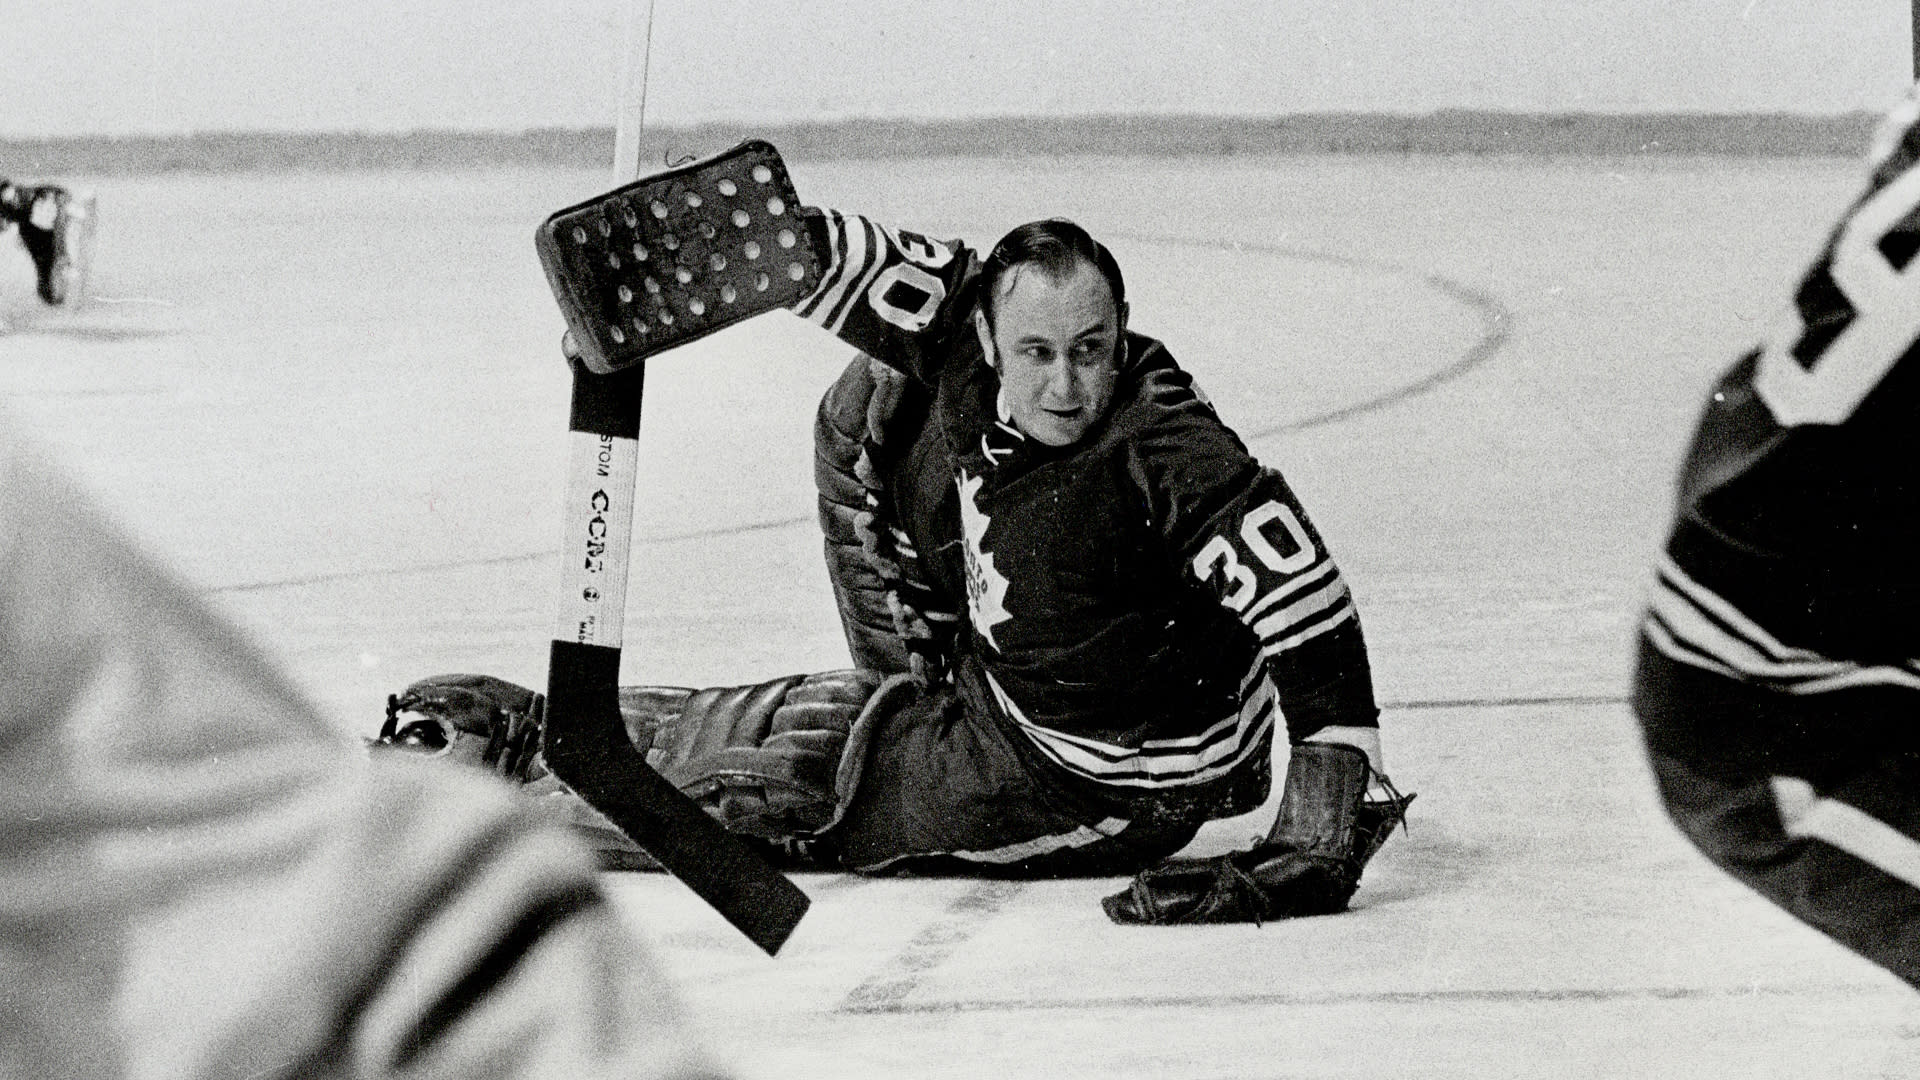 Terry Sawchuk, Goaltender, Stanley Cup, NHL